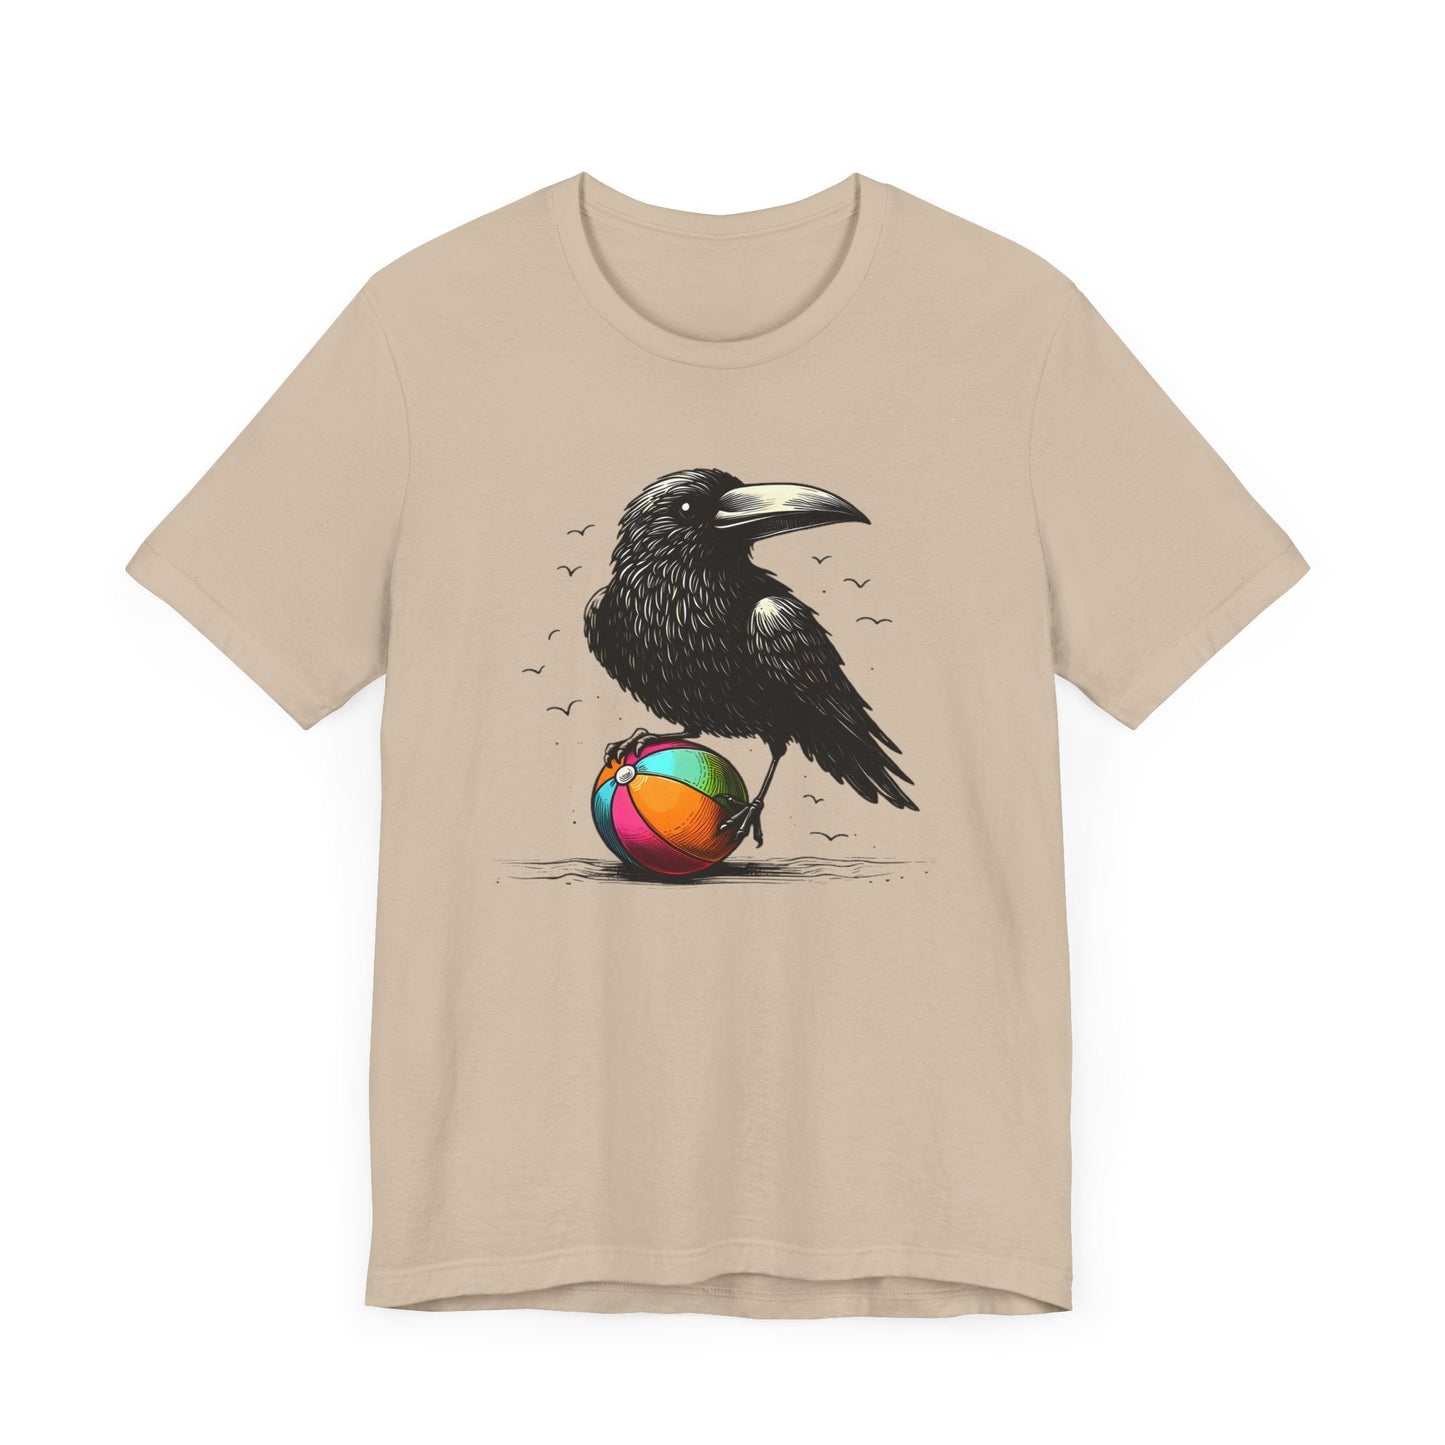 Raven On Beach Ball Short Sleeve Tee ShirtT - ShirtVTZdesignsTanXSCottonCrew neckcrow